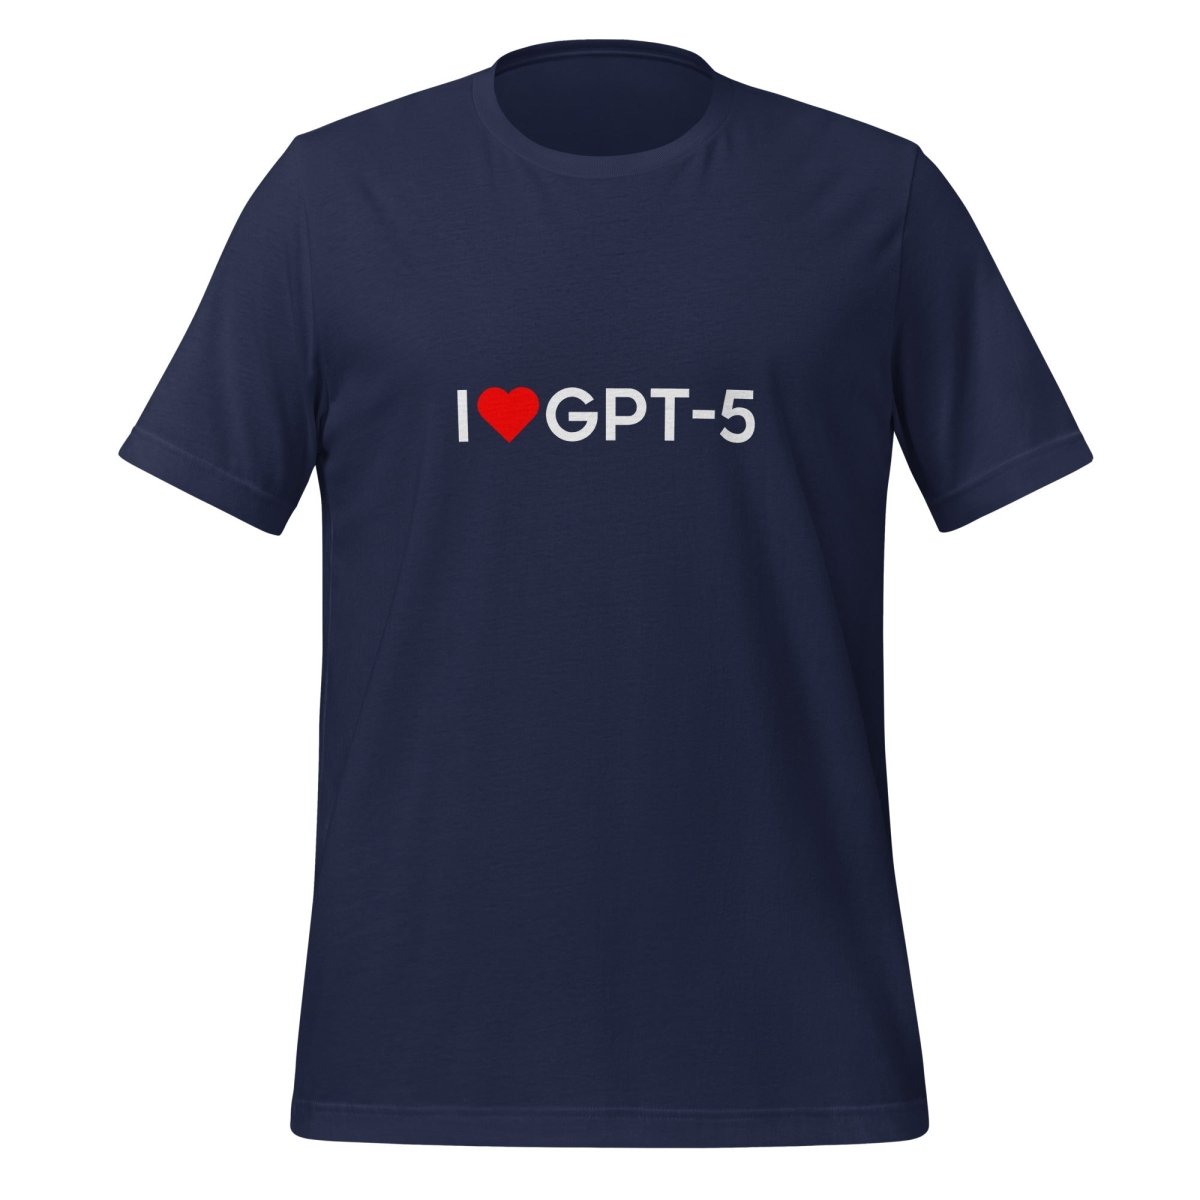 I Heart GPT - 5 T - Shirt (unisex) - Navy - AI Store